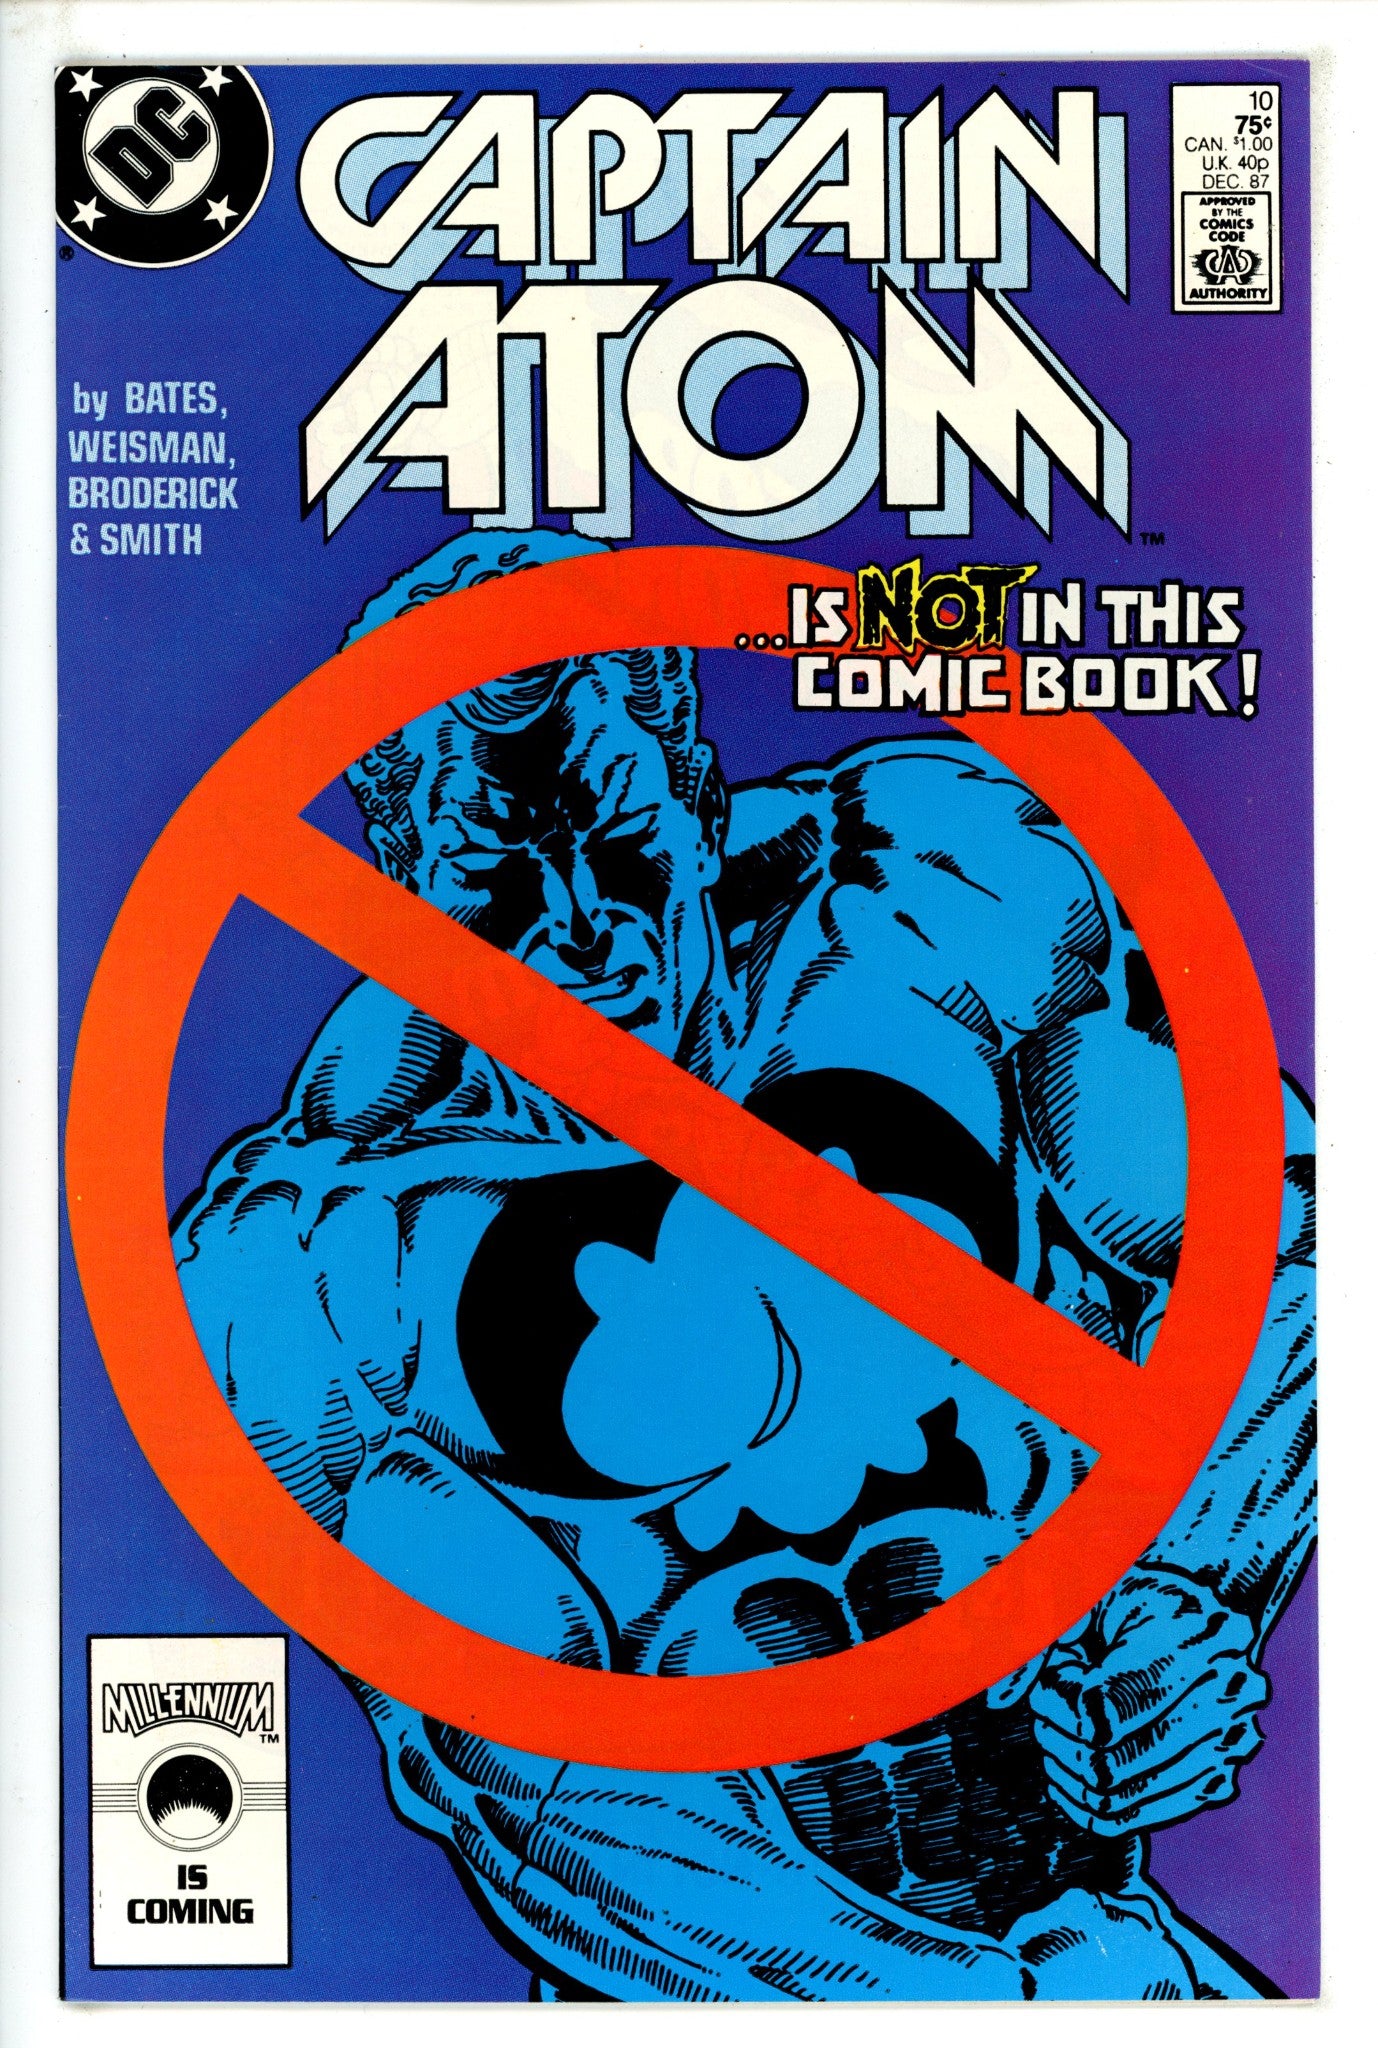 Captain Atom Vol 3 10 (1987)